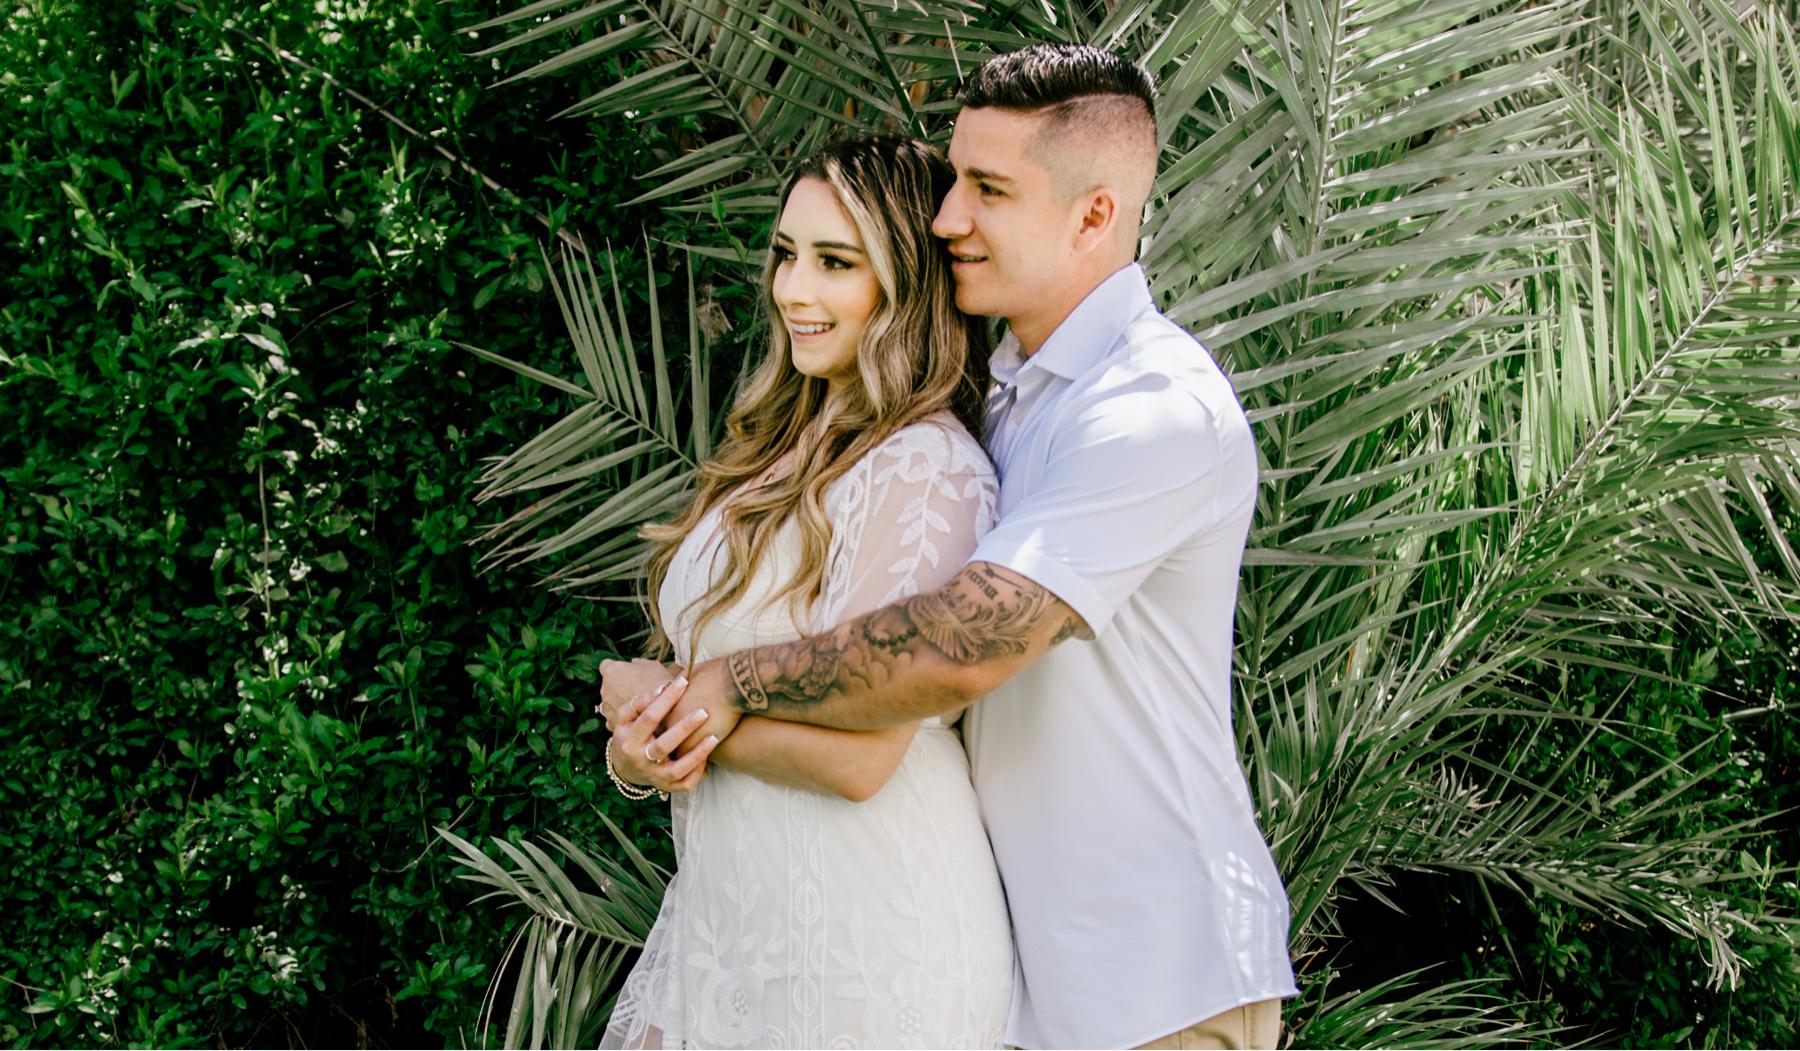 The Wedding Website of Ashley Muñoz and Bryant Muñoz